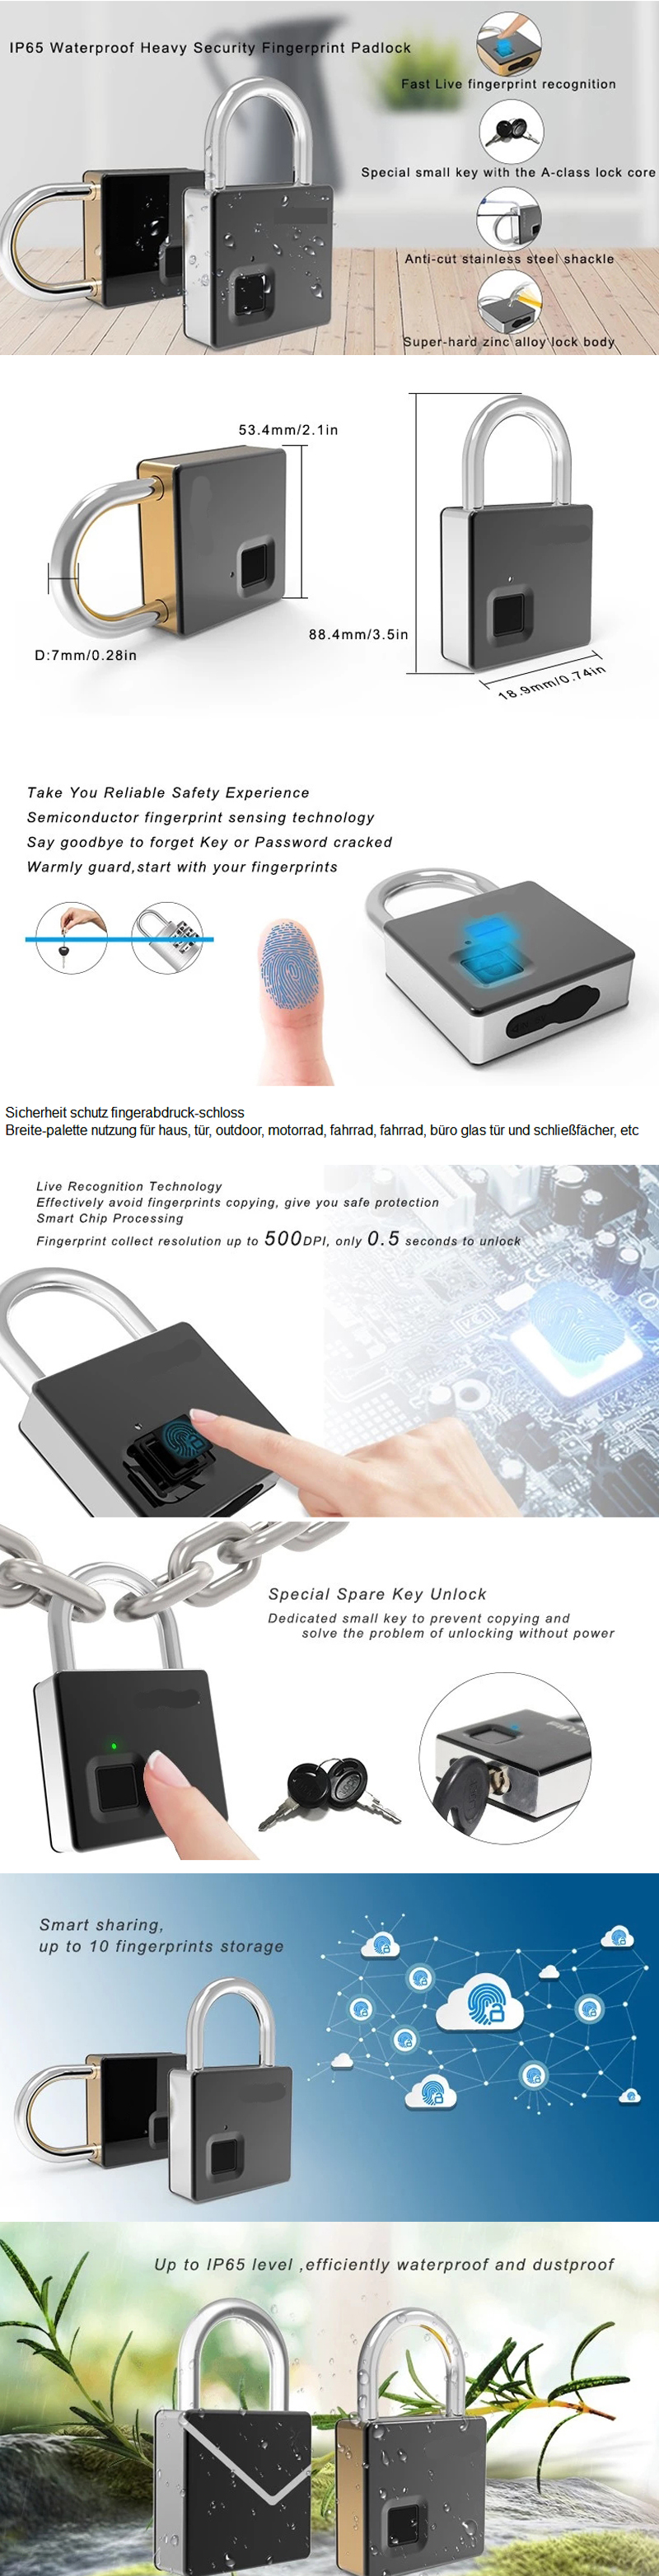 Fipilock-FL-S5-Smart-Anti-theft-USB-Fingerprint-Lock-IP65-Waterproof-Travel-Suitcase-Luggage-Padlock-1521858-1